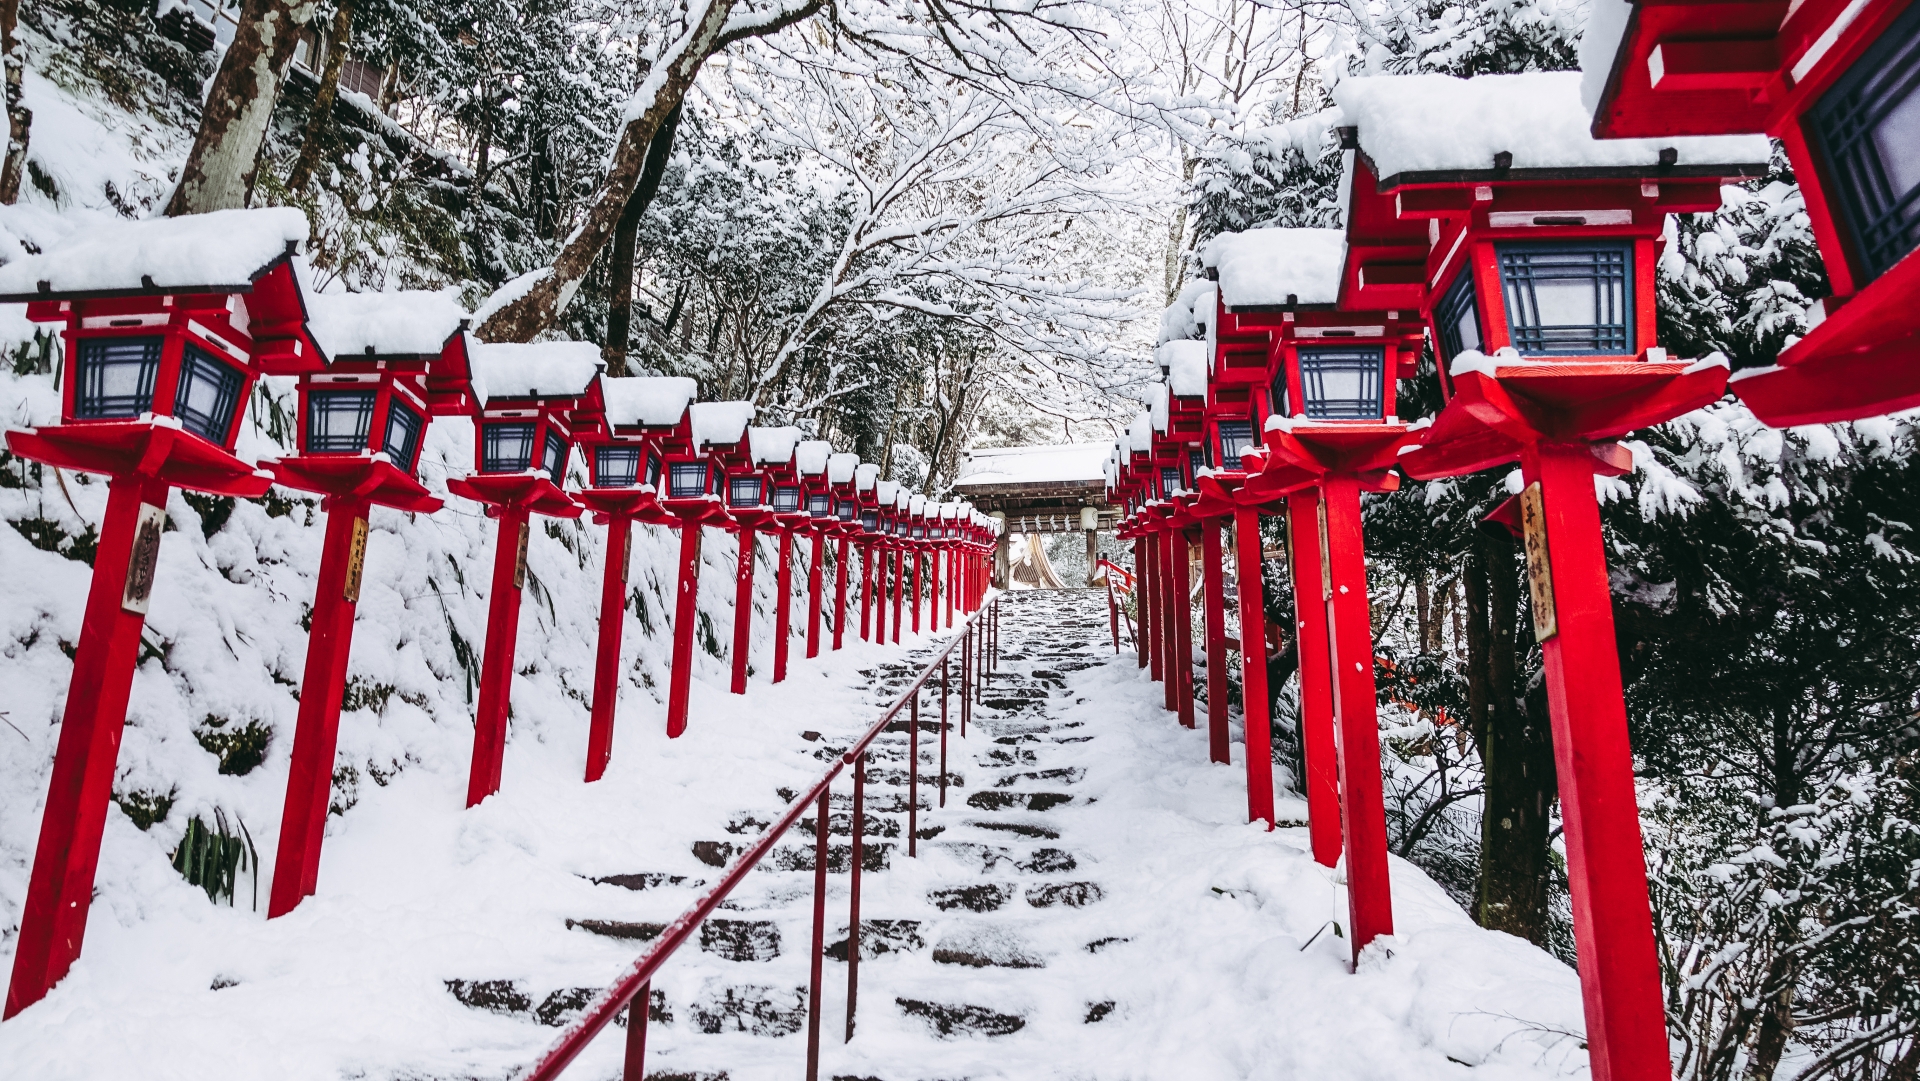 japan travel itinerary winter